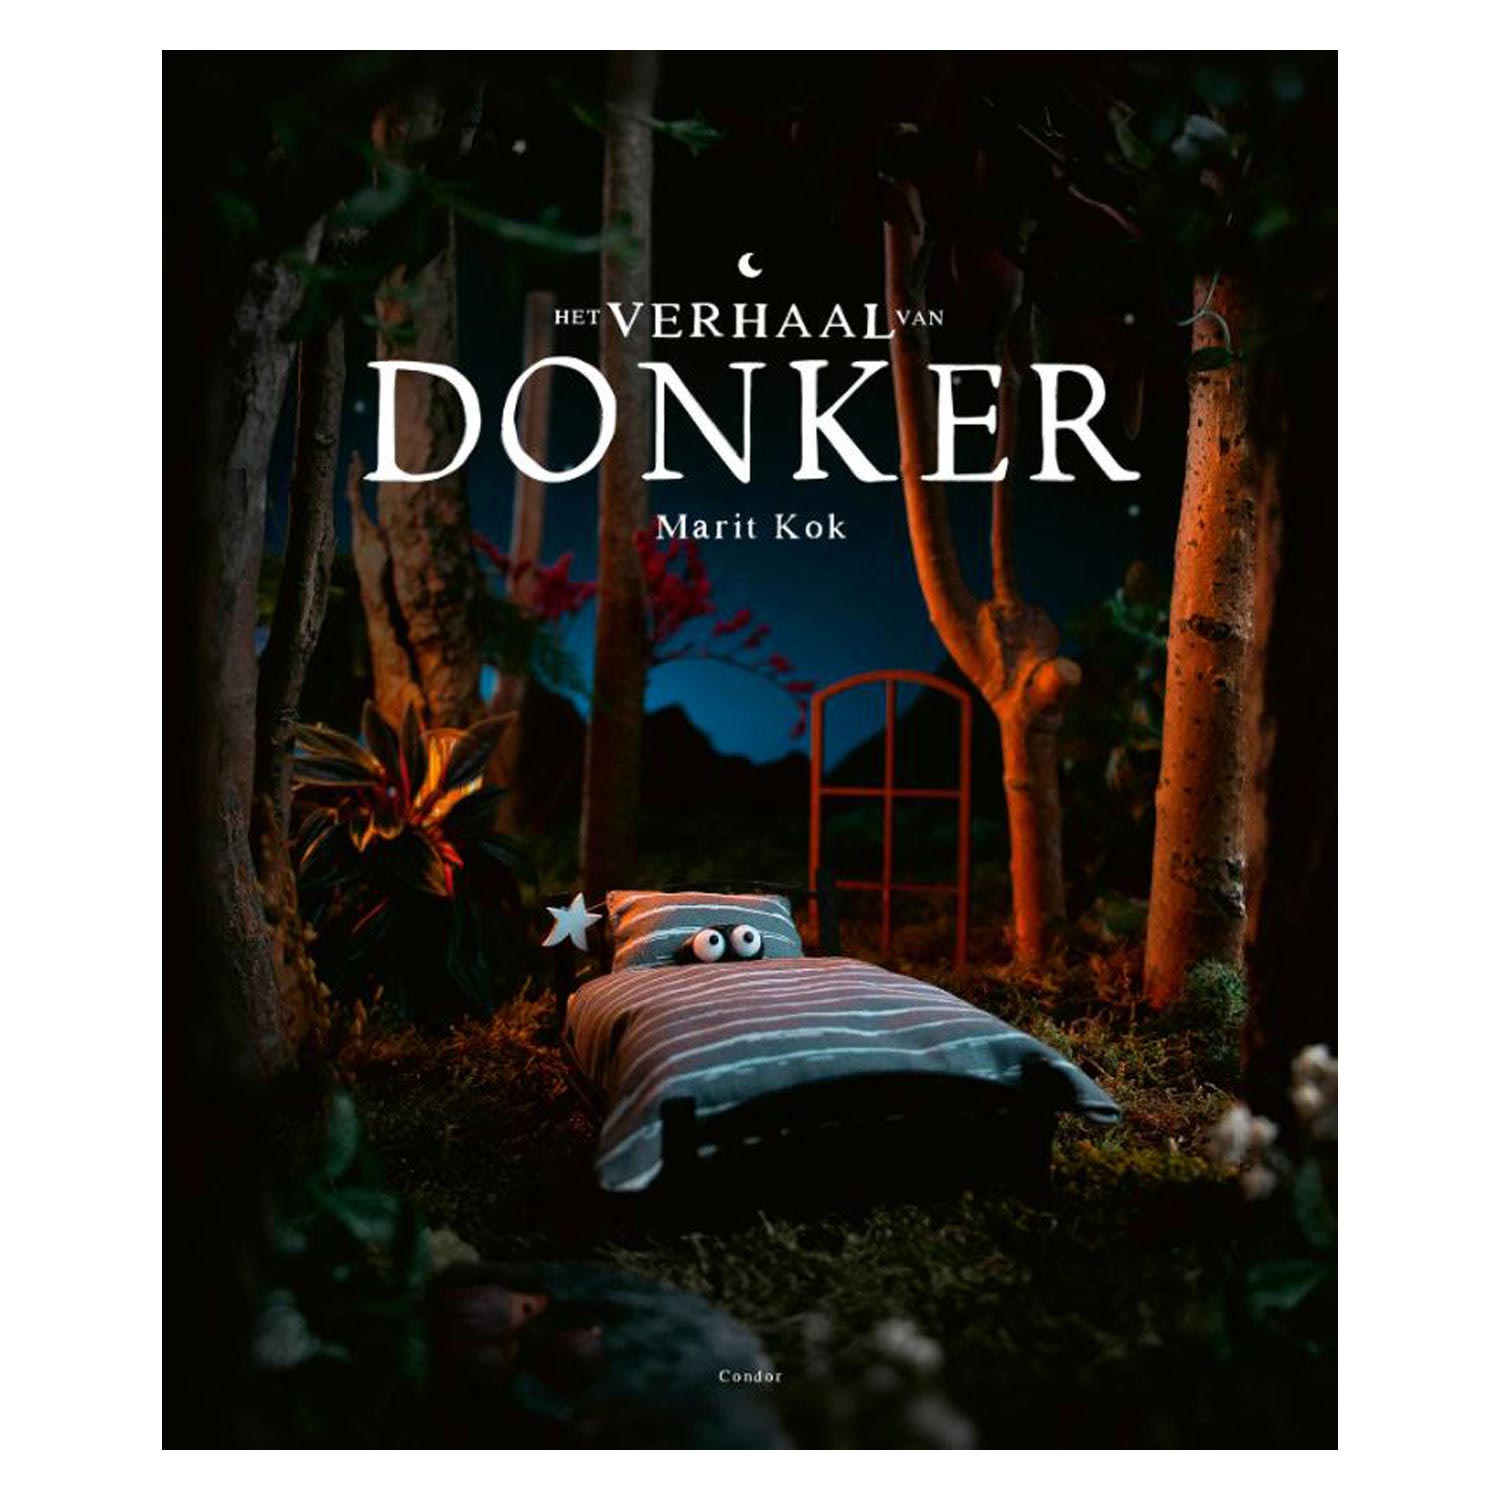 L'histoire de Donker